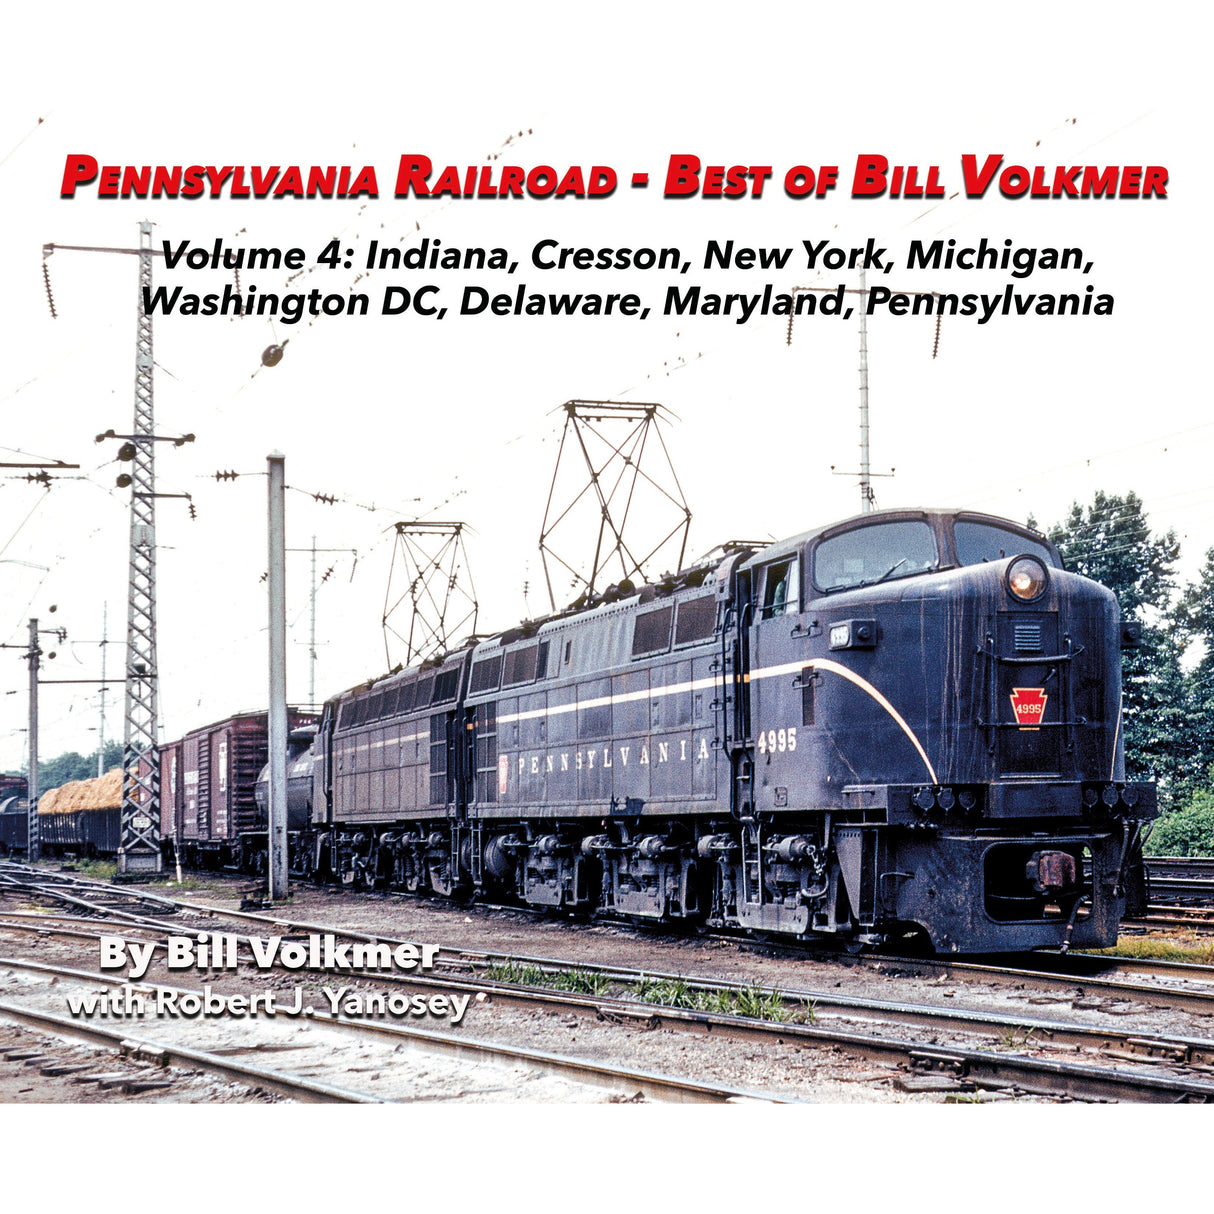 Morning Sun Books Pennsylvania Railroad - Best of Bill Volkmer Volume 4: Indiana, Cresson, New York, Michigan, Washington DC, Delaware, Maryland, Pennsylvania (Softcover)